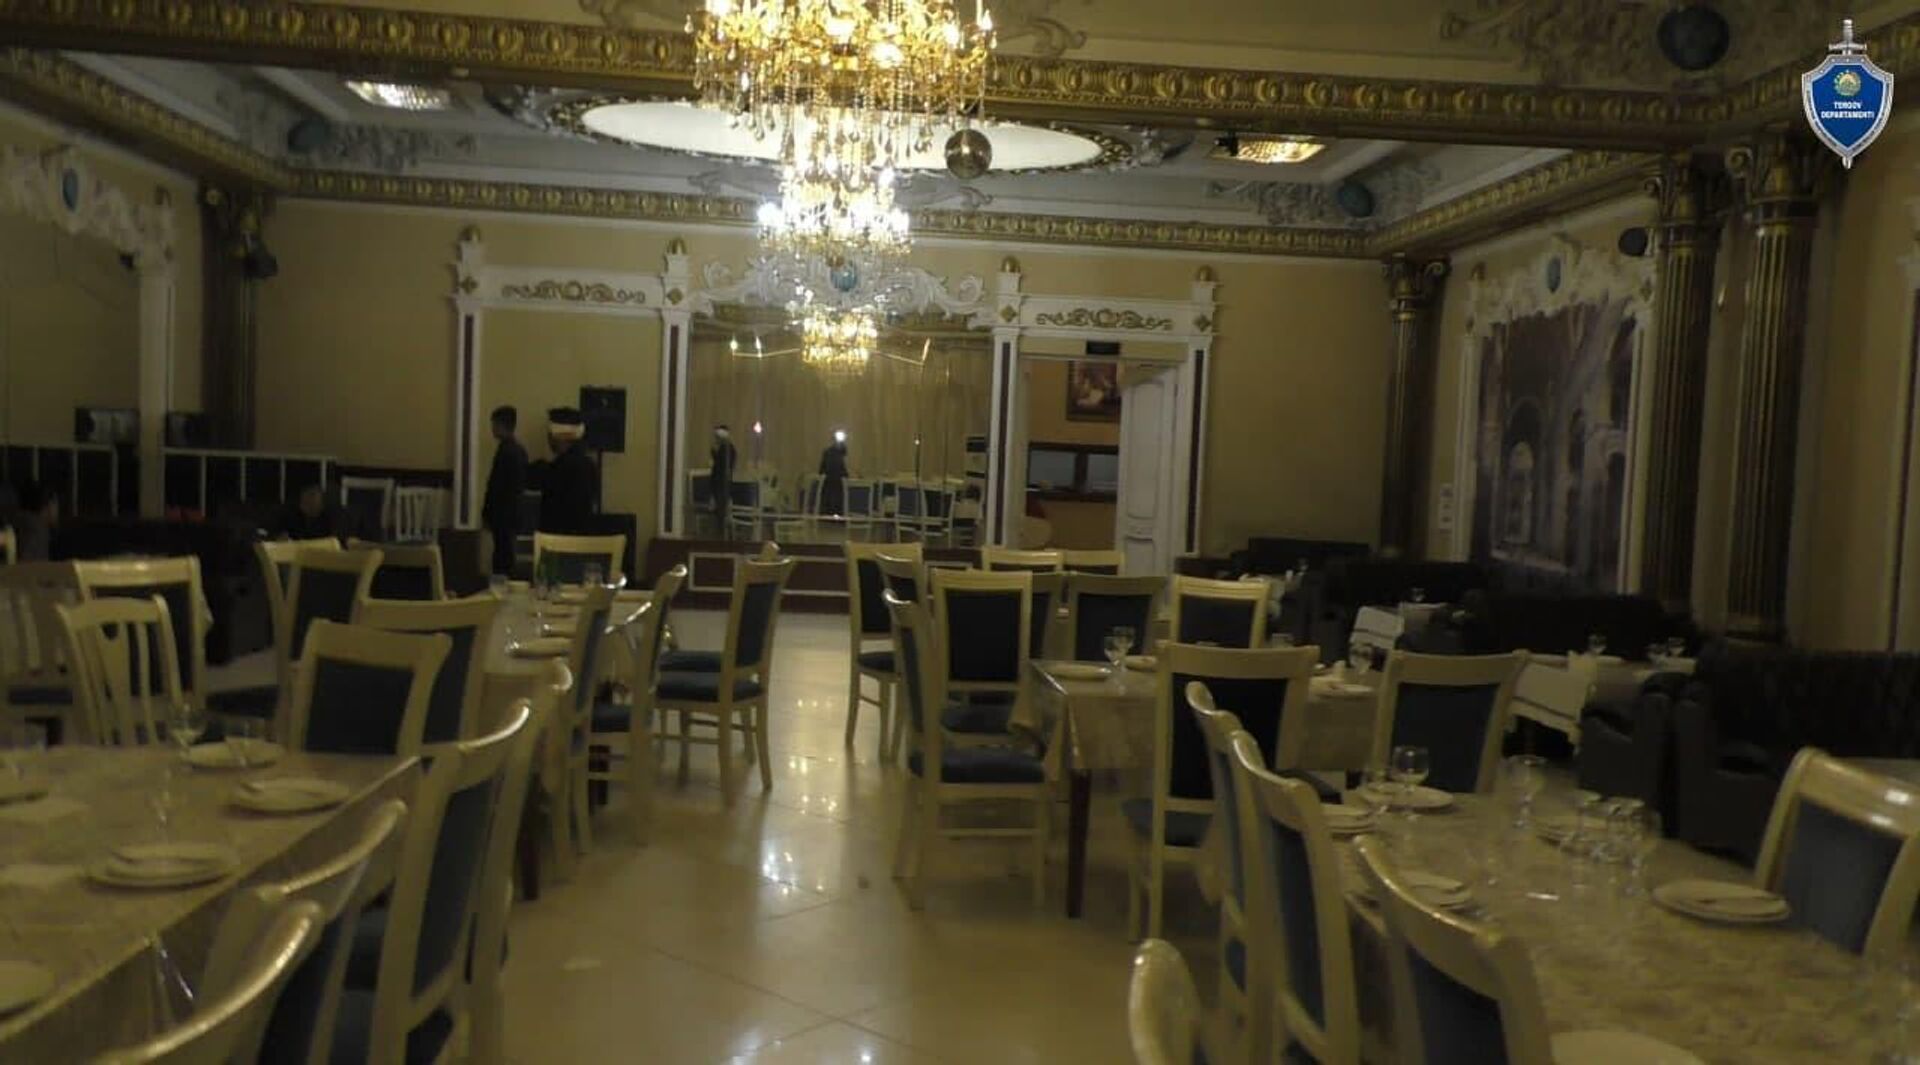 Ресторан Prim, где произошел инцидент - Sputnik Узбекистан, 1920, 14.04.2021